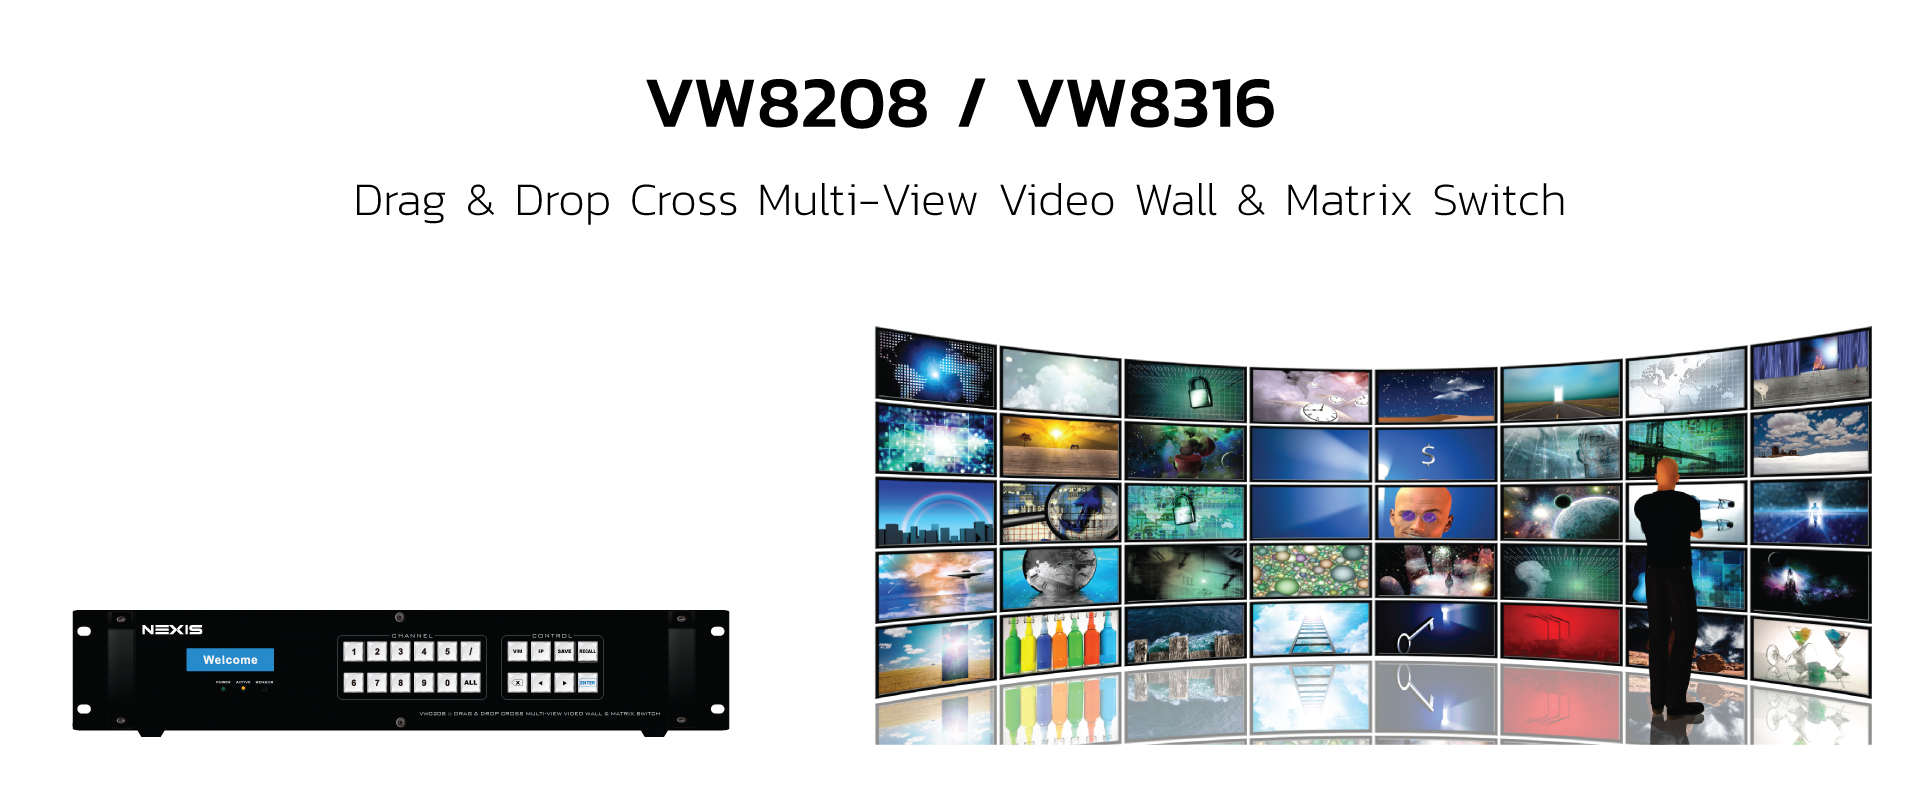 NEXIS Drag & Drop Cross multiview vieo wall matrix switch